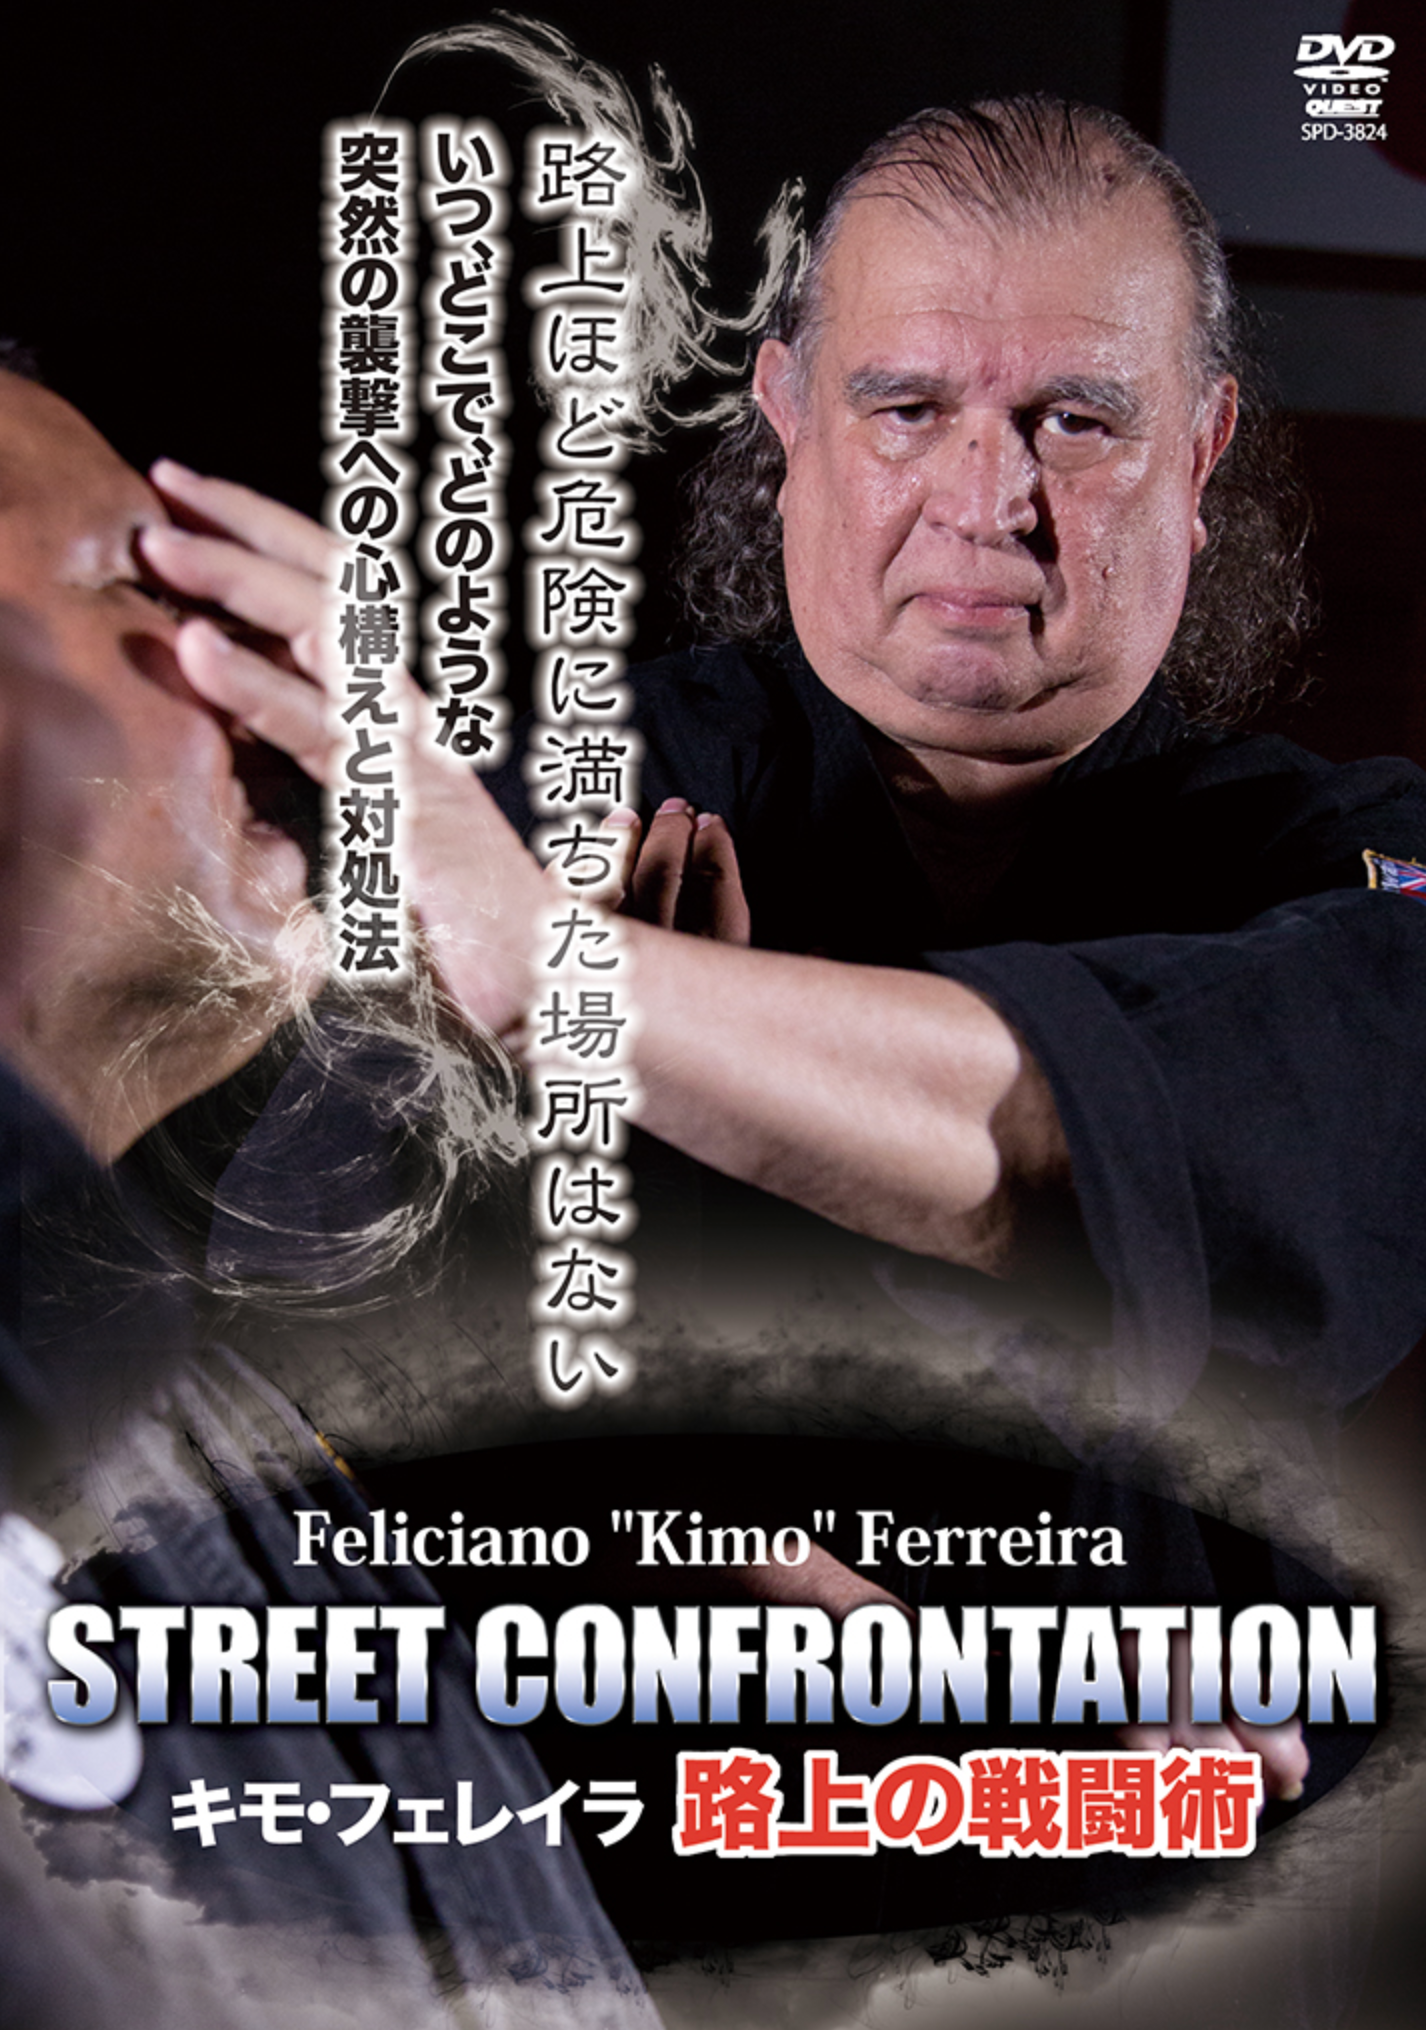 Street Confrontation DVD with Feliciano Kimo Ferreira - Budovideos